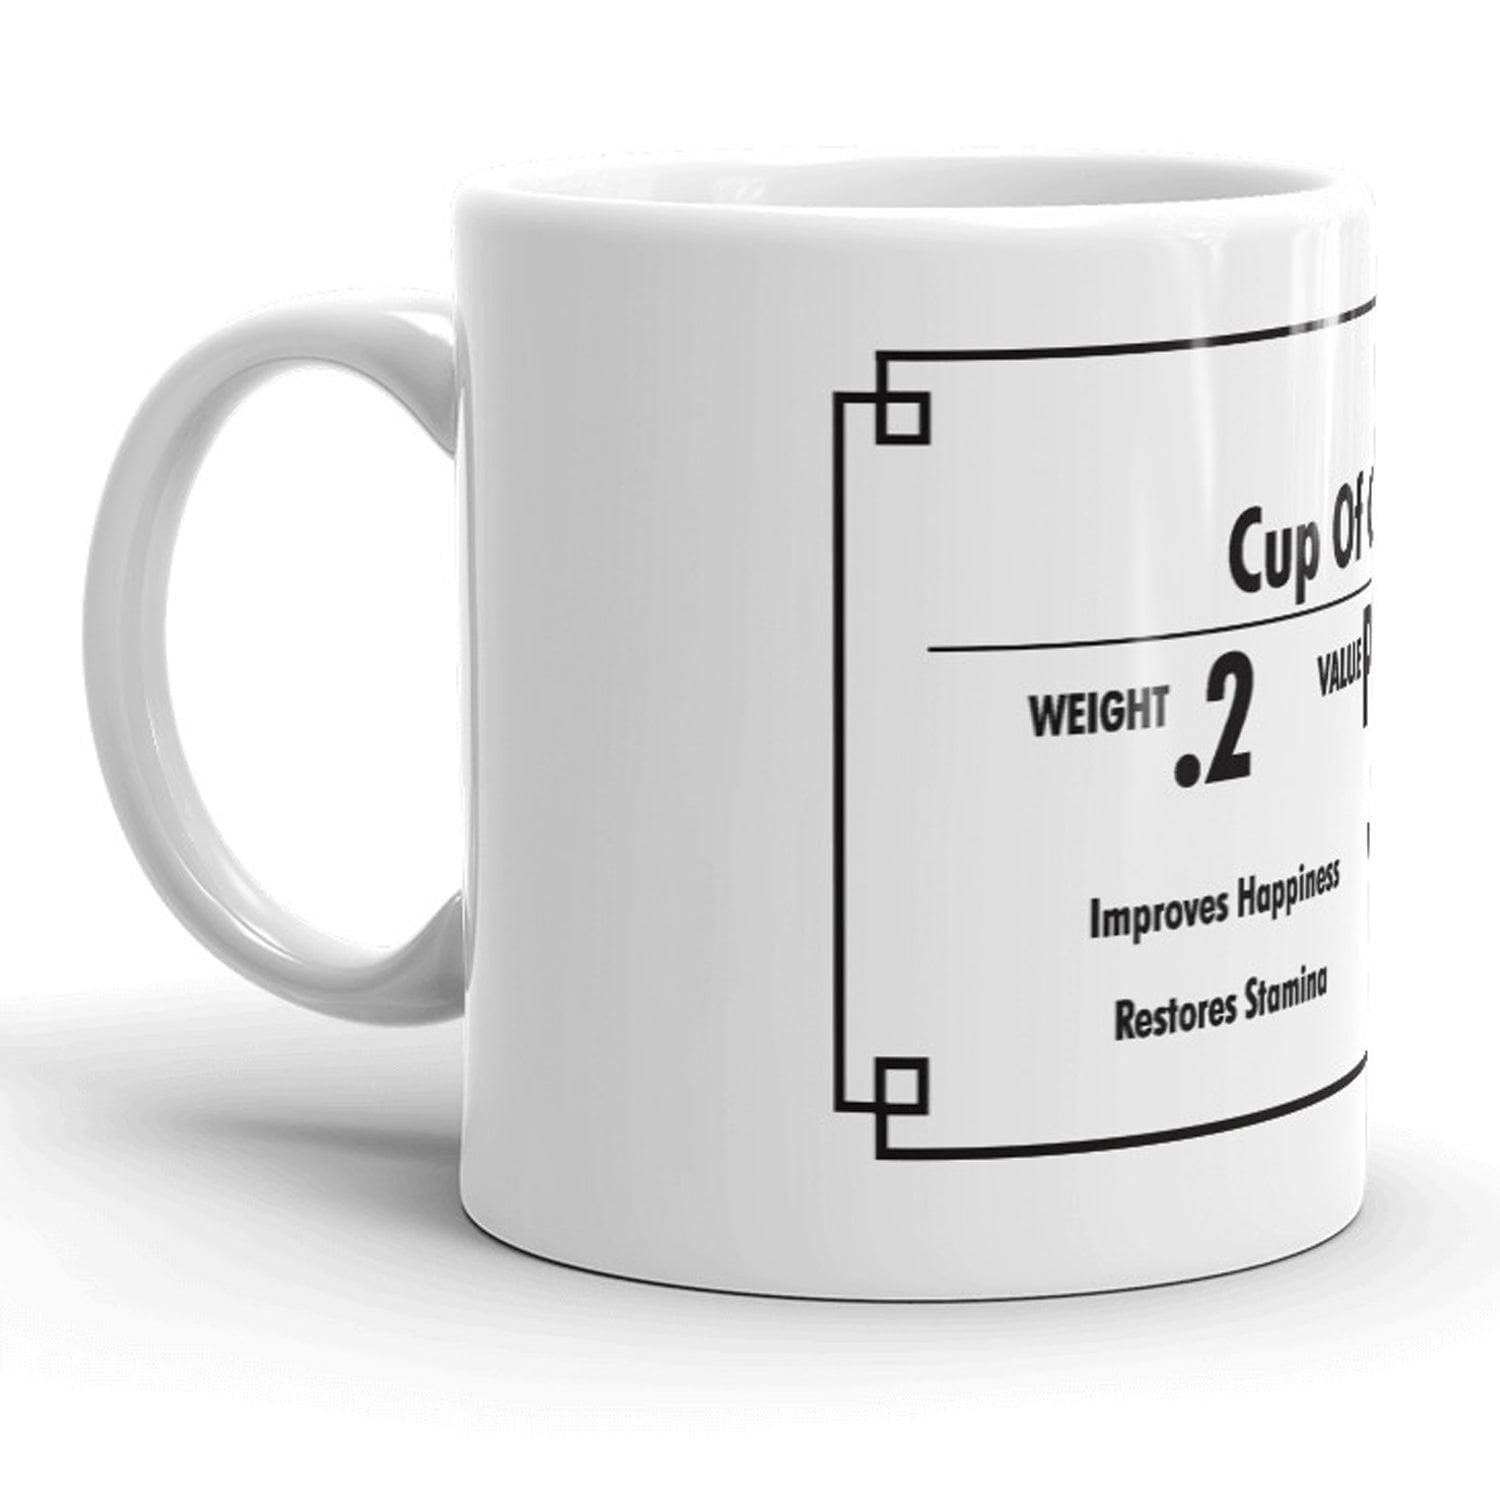 Cup Of Coffee: Priceless Mug  -  Crazy Dog T-Shirts